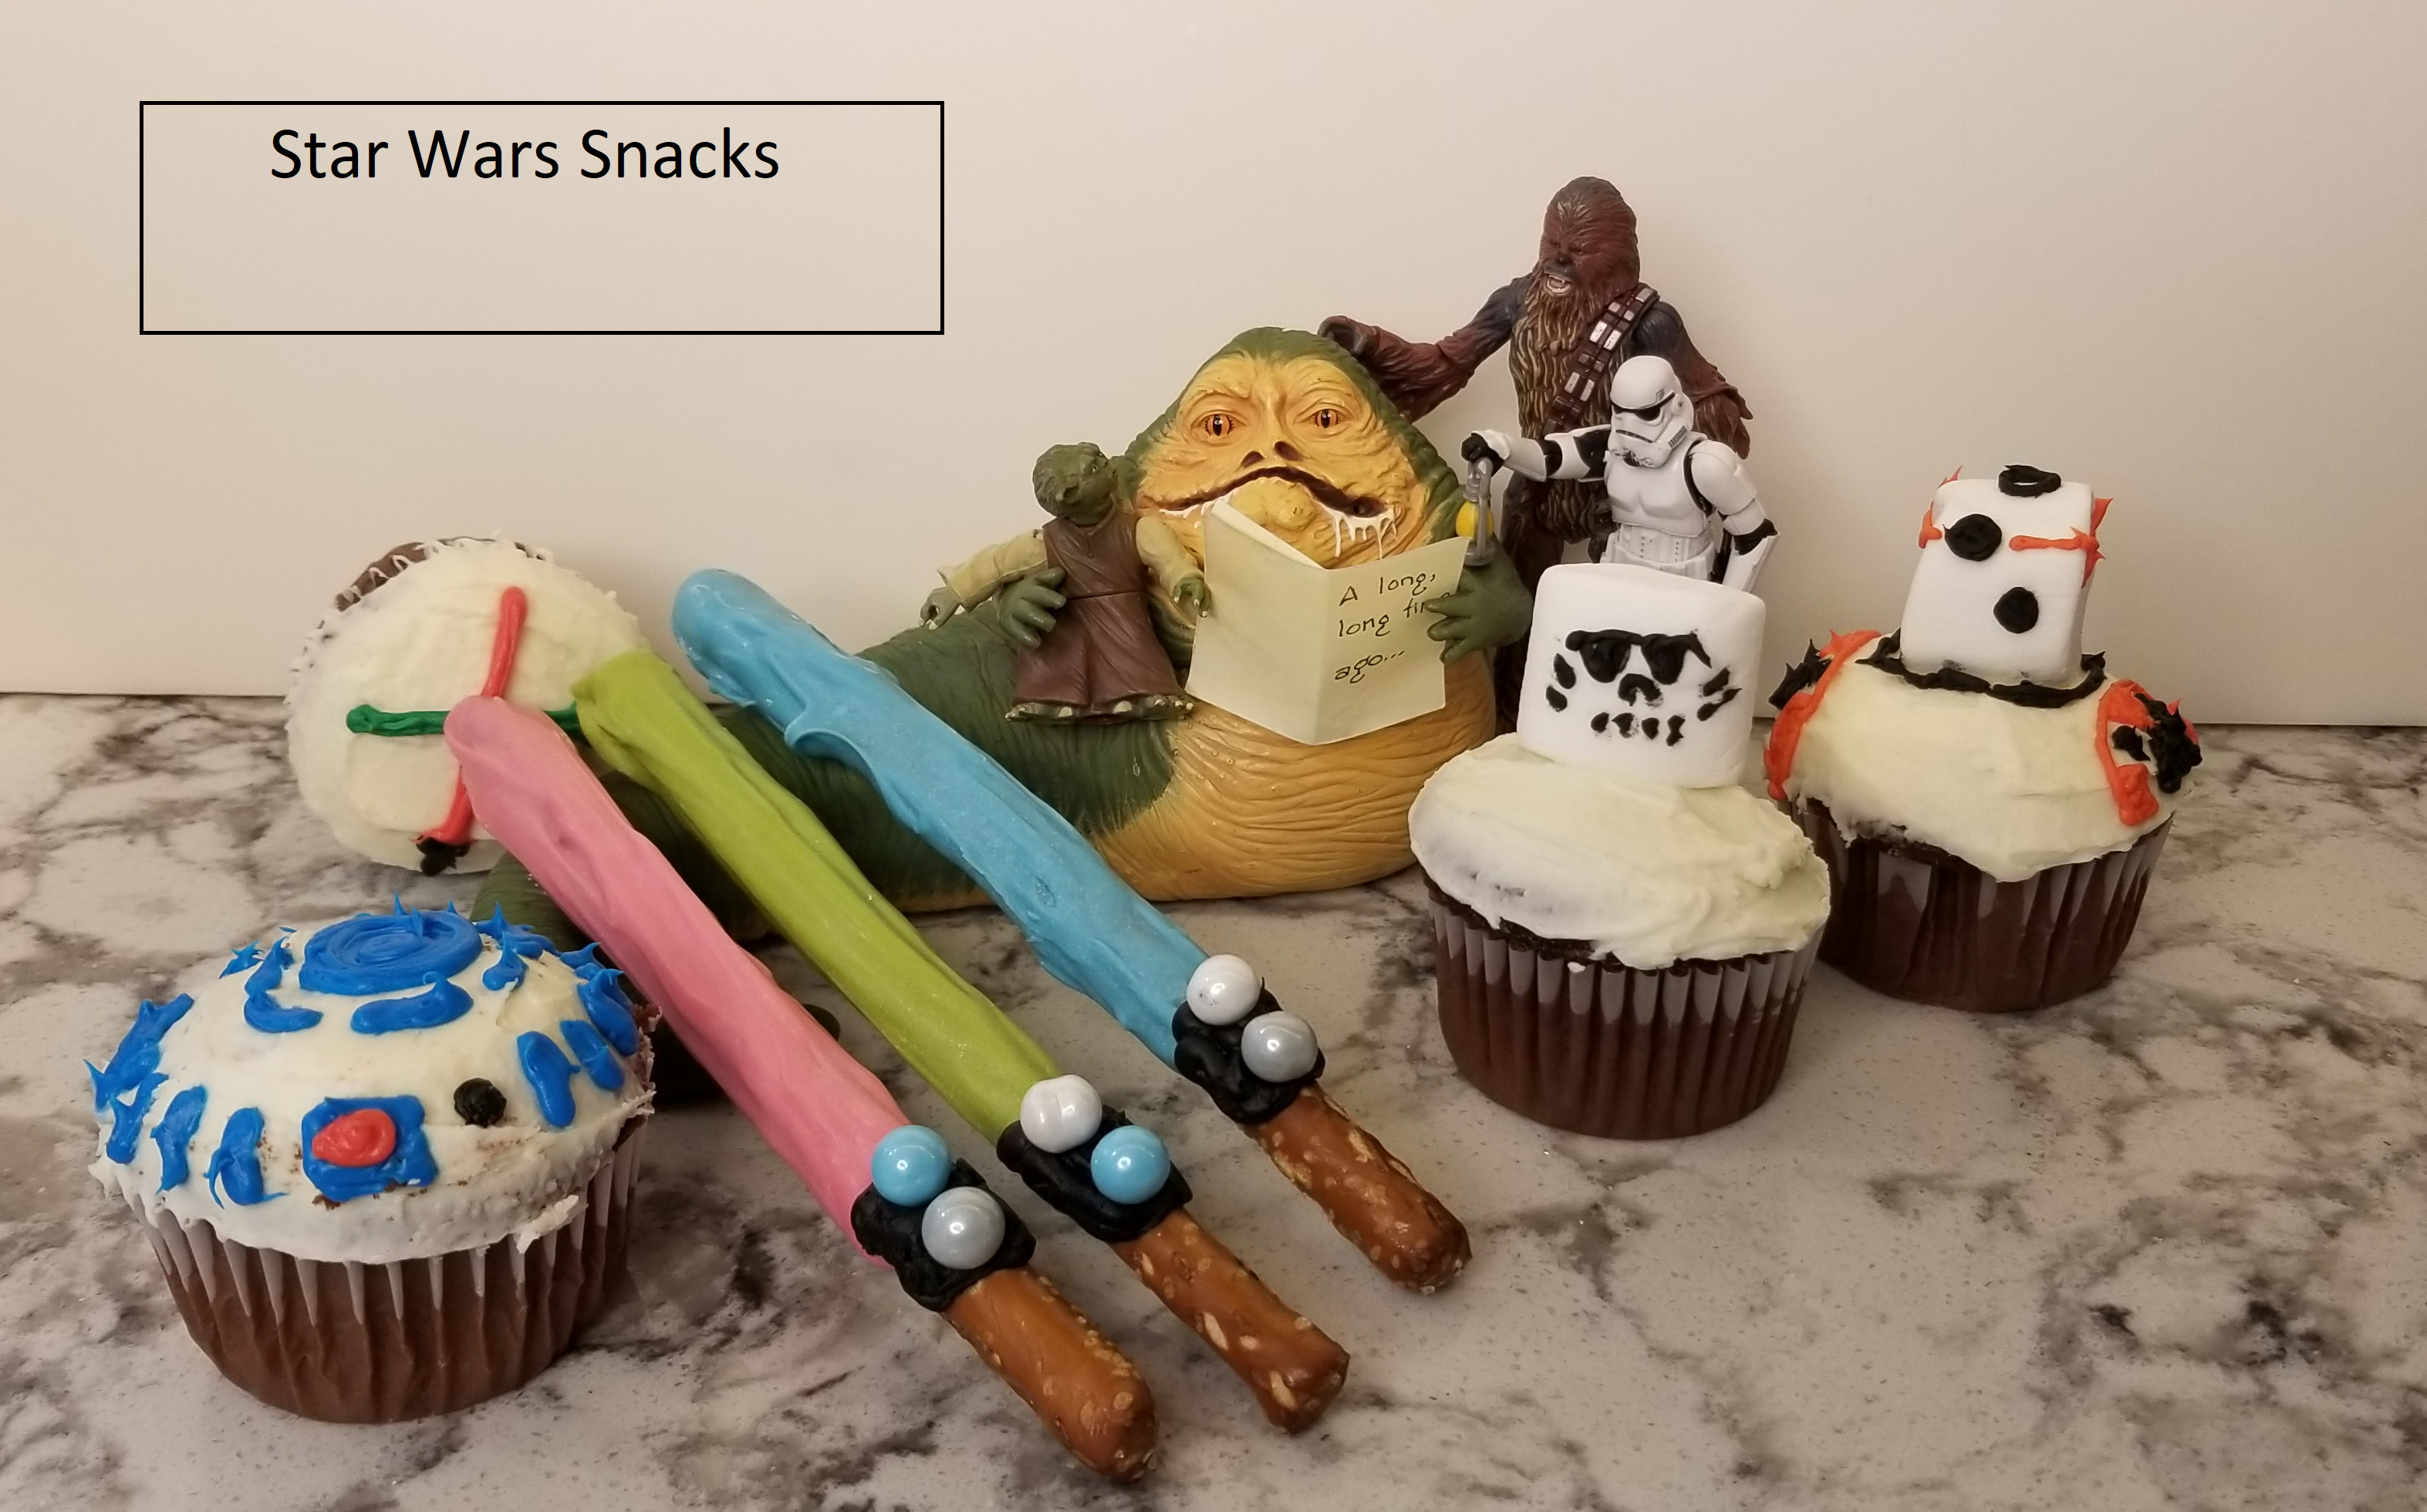 Star Wars Snacks